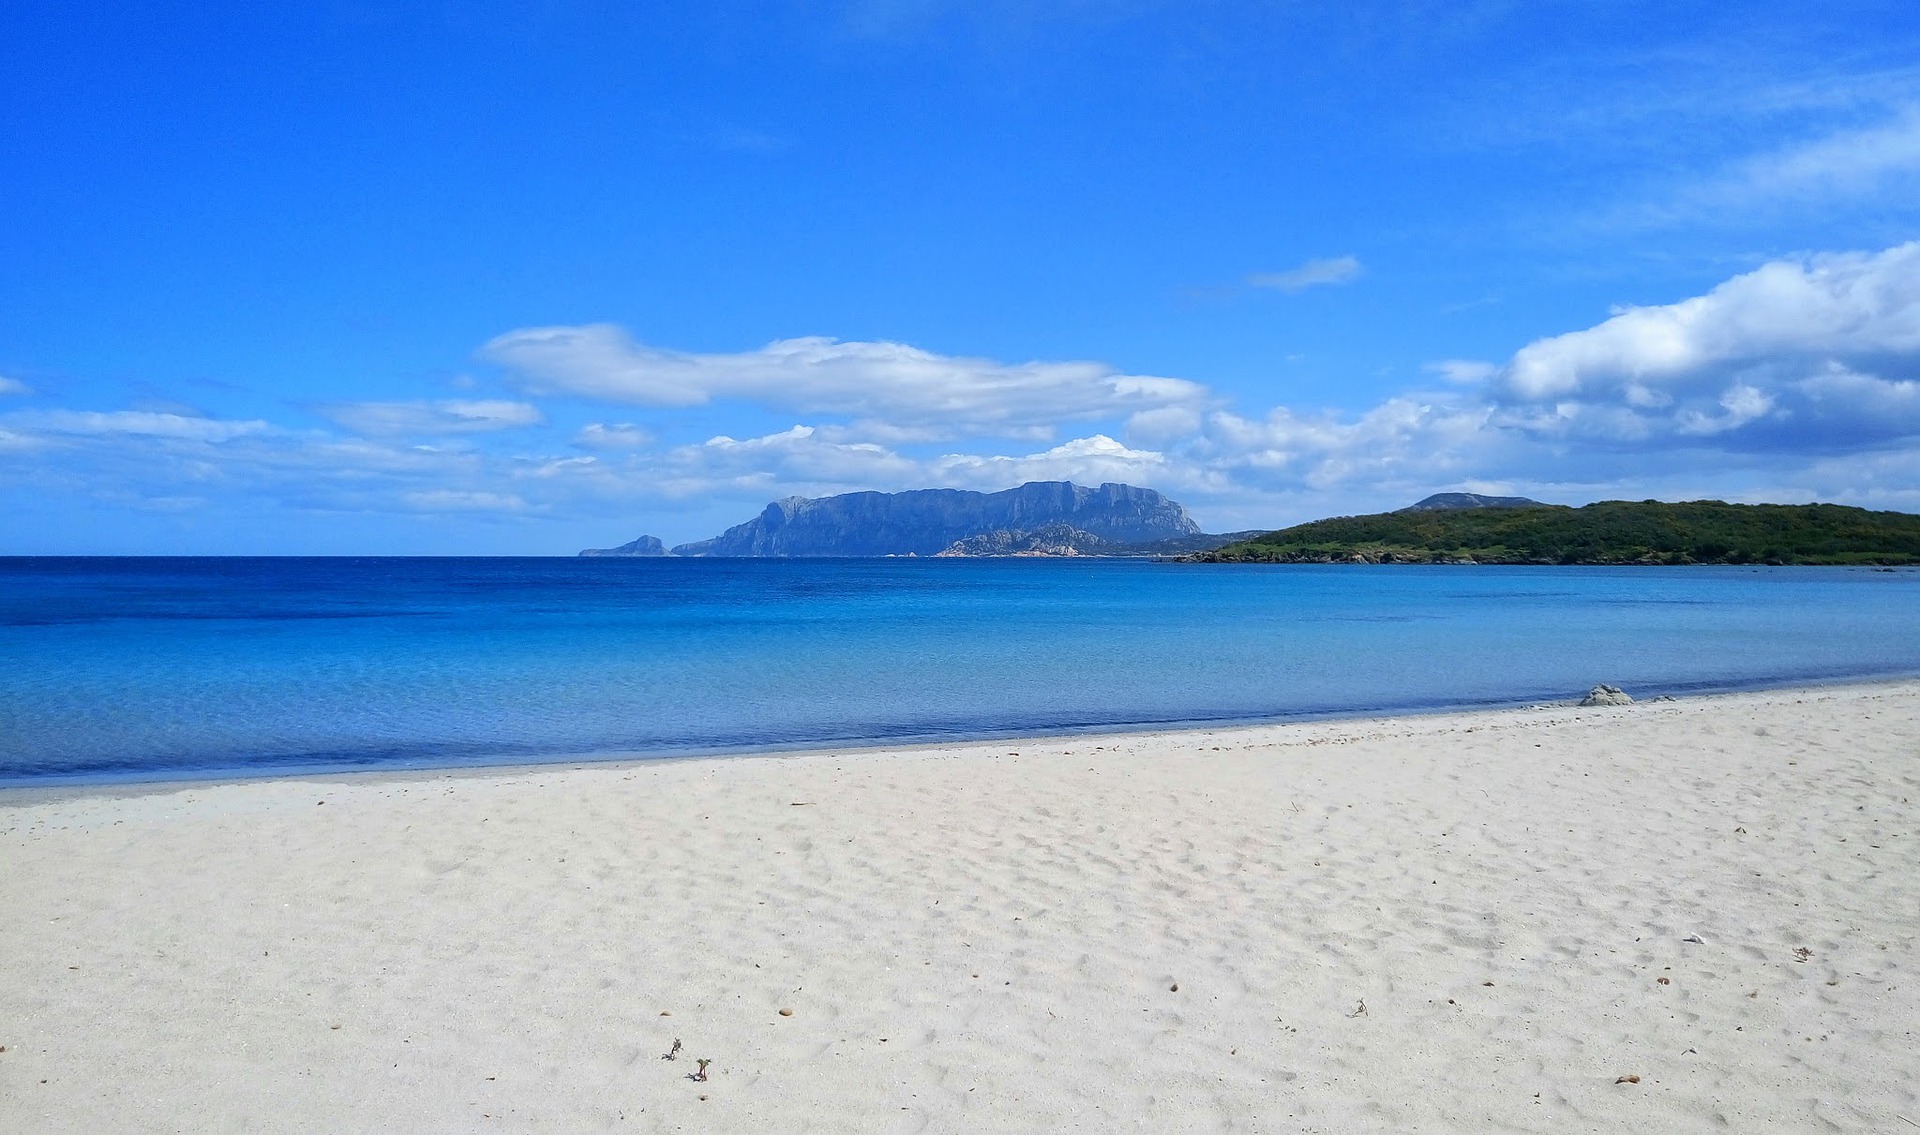 Familienurlaub auf Sardinien ab 161,00€ pro Person 6 Tage